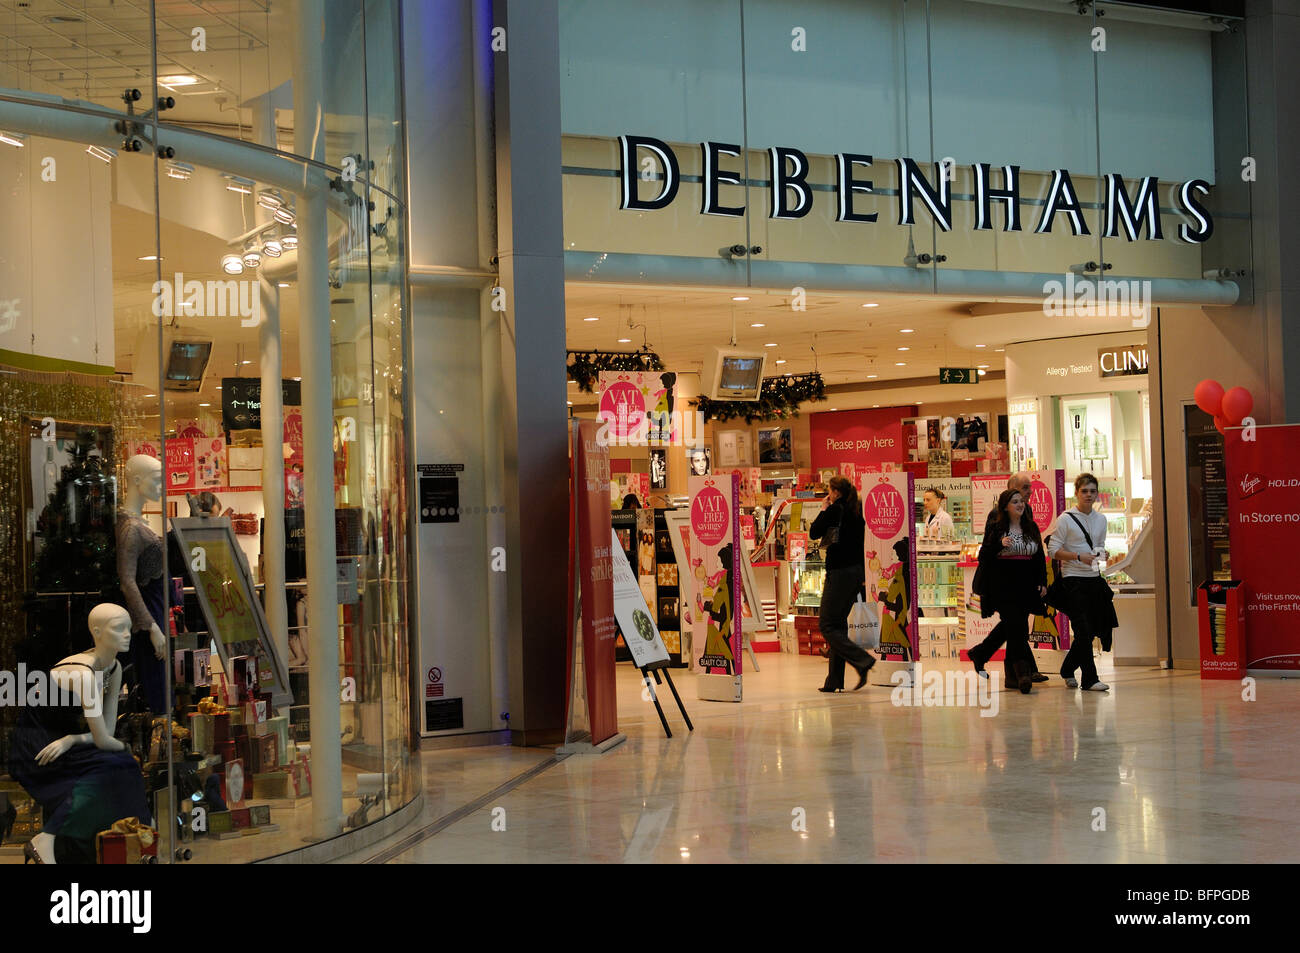 Debenhams retail chainstore shopfront entrance Stock Photo